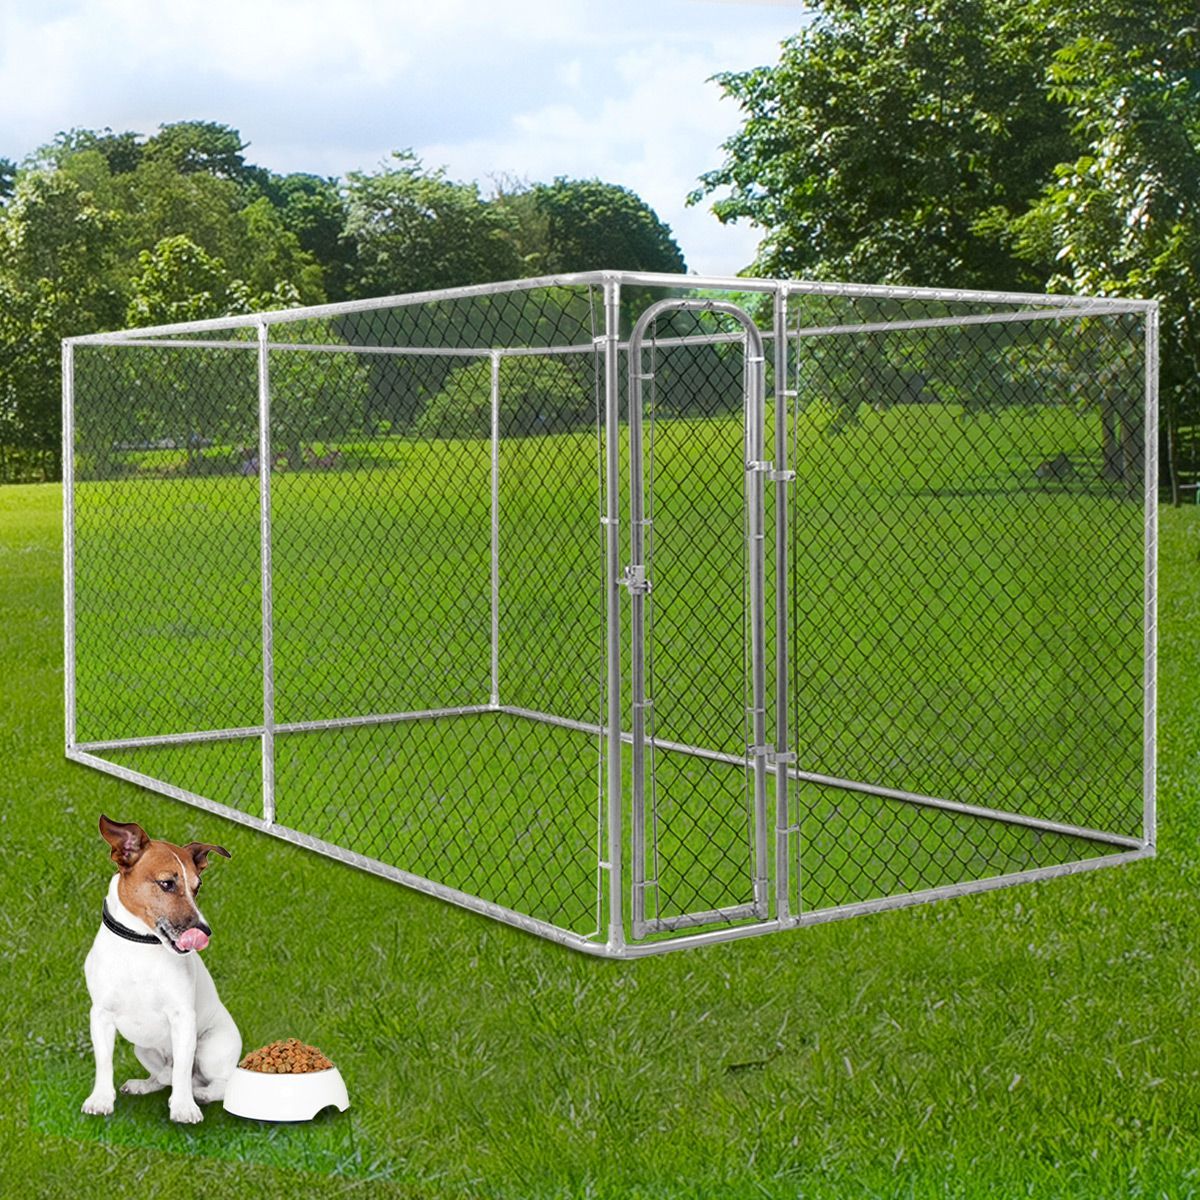 Dog Kennel Run And Pet Enclosure Run Animal Fencing Fence 4m X 23m X 1